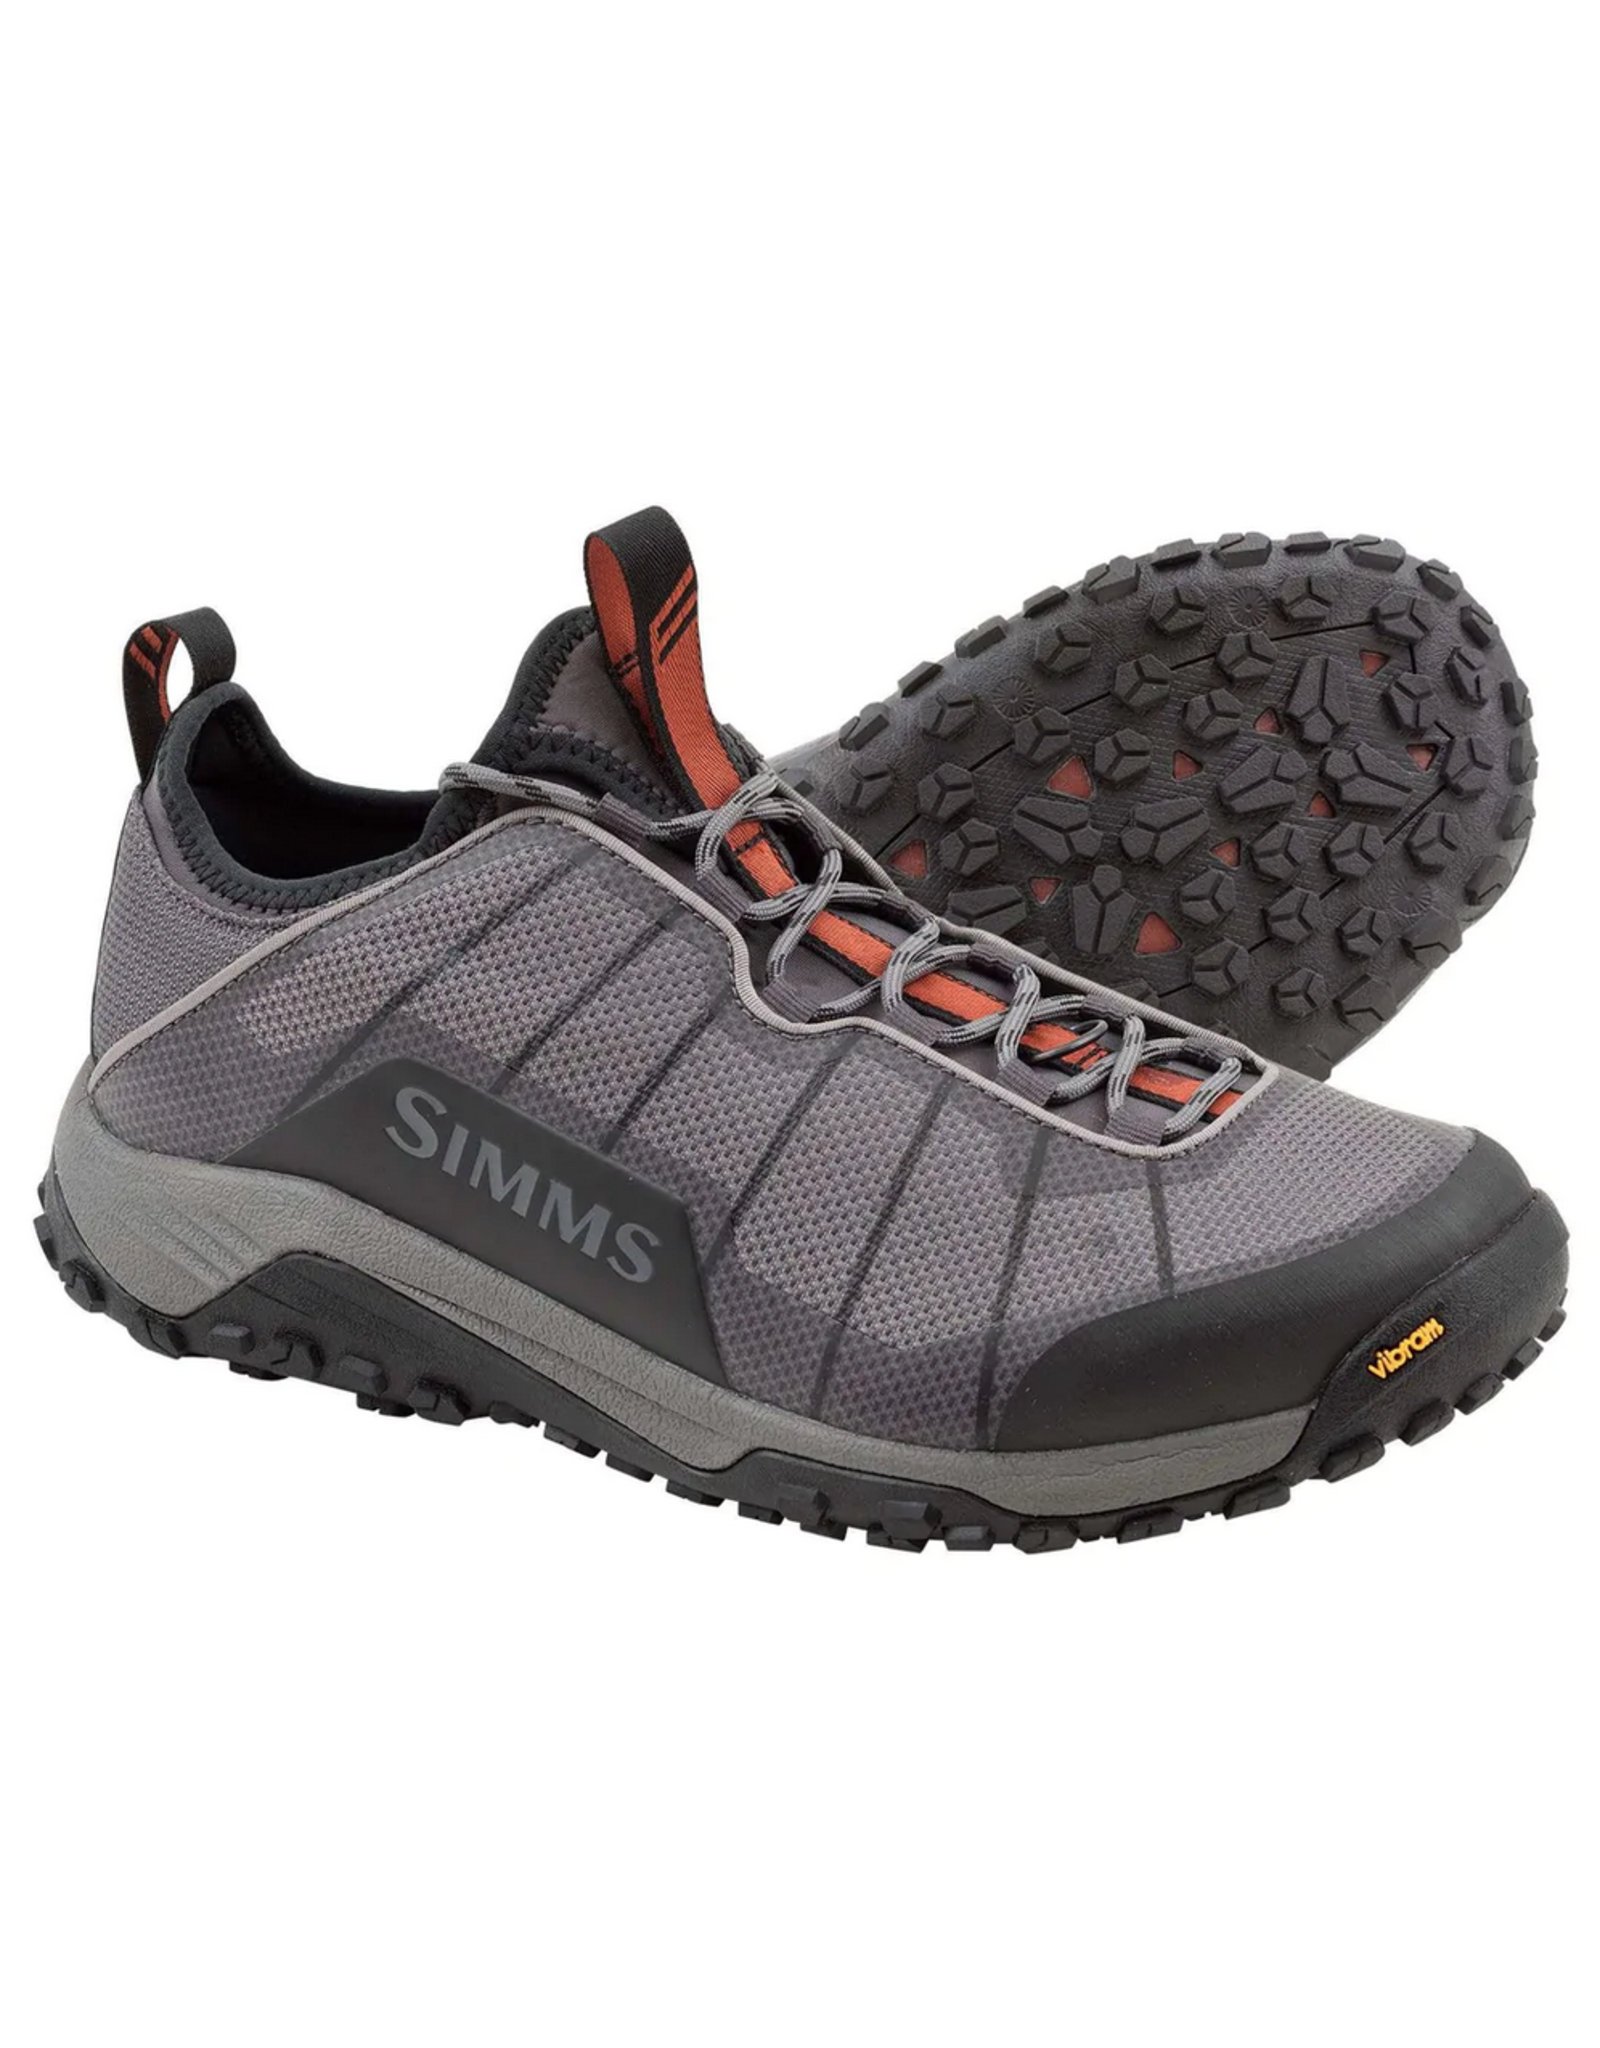 Simms M's Flyweight Wet Wading Shoe